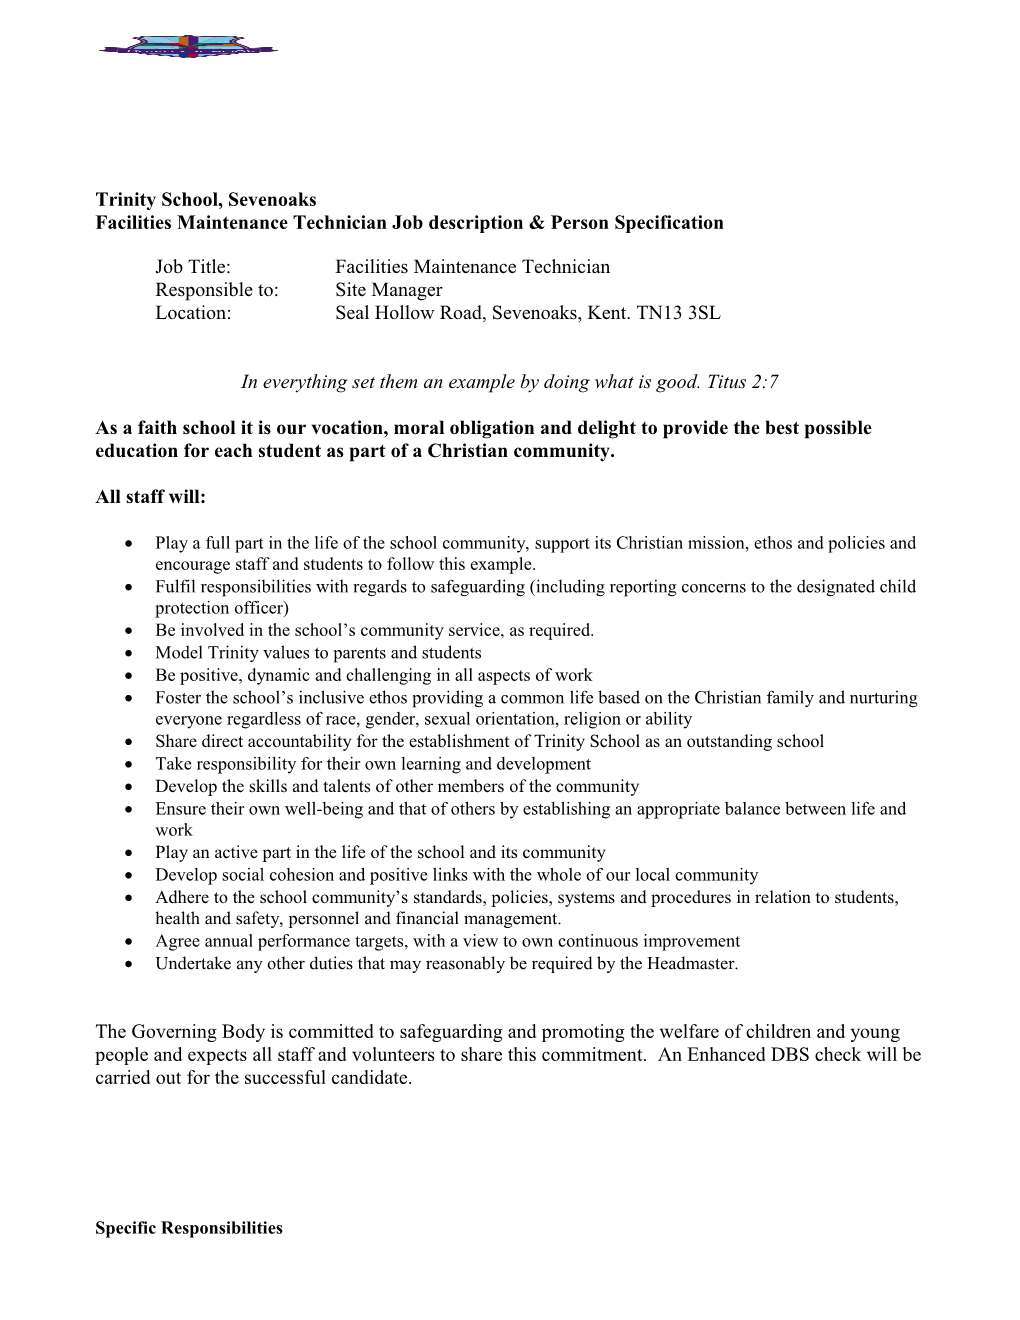 Facilities Maintenance Technician Job Description Person Specification